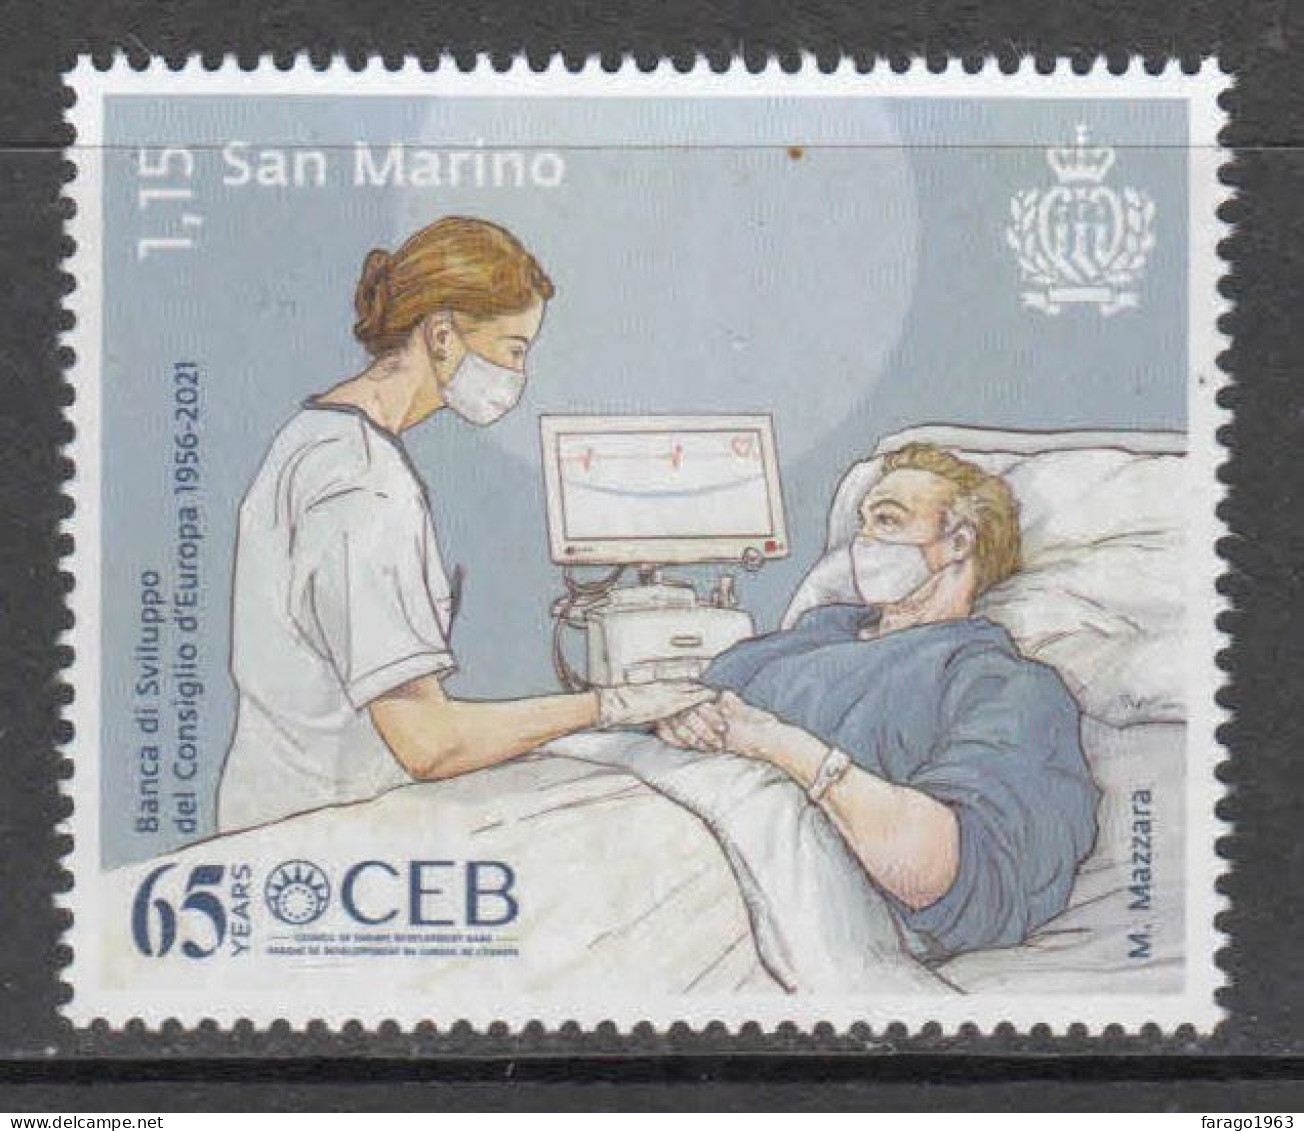 2021 San Marino CEB Development Bank Of Europe Health Nurse COVID Complete Set Of 1 MNH @ BELOW FACE VALUE - Ungebraucht